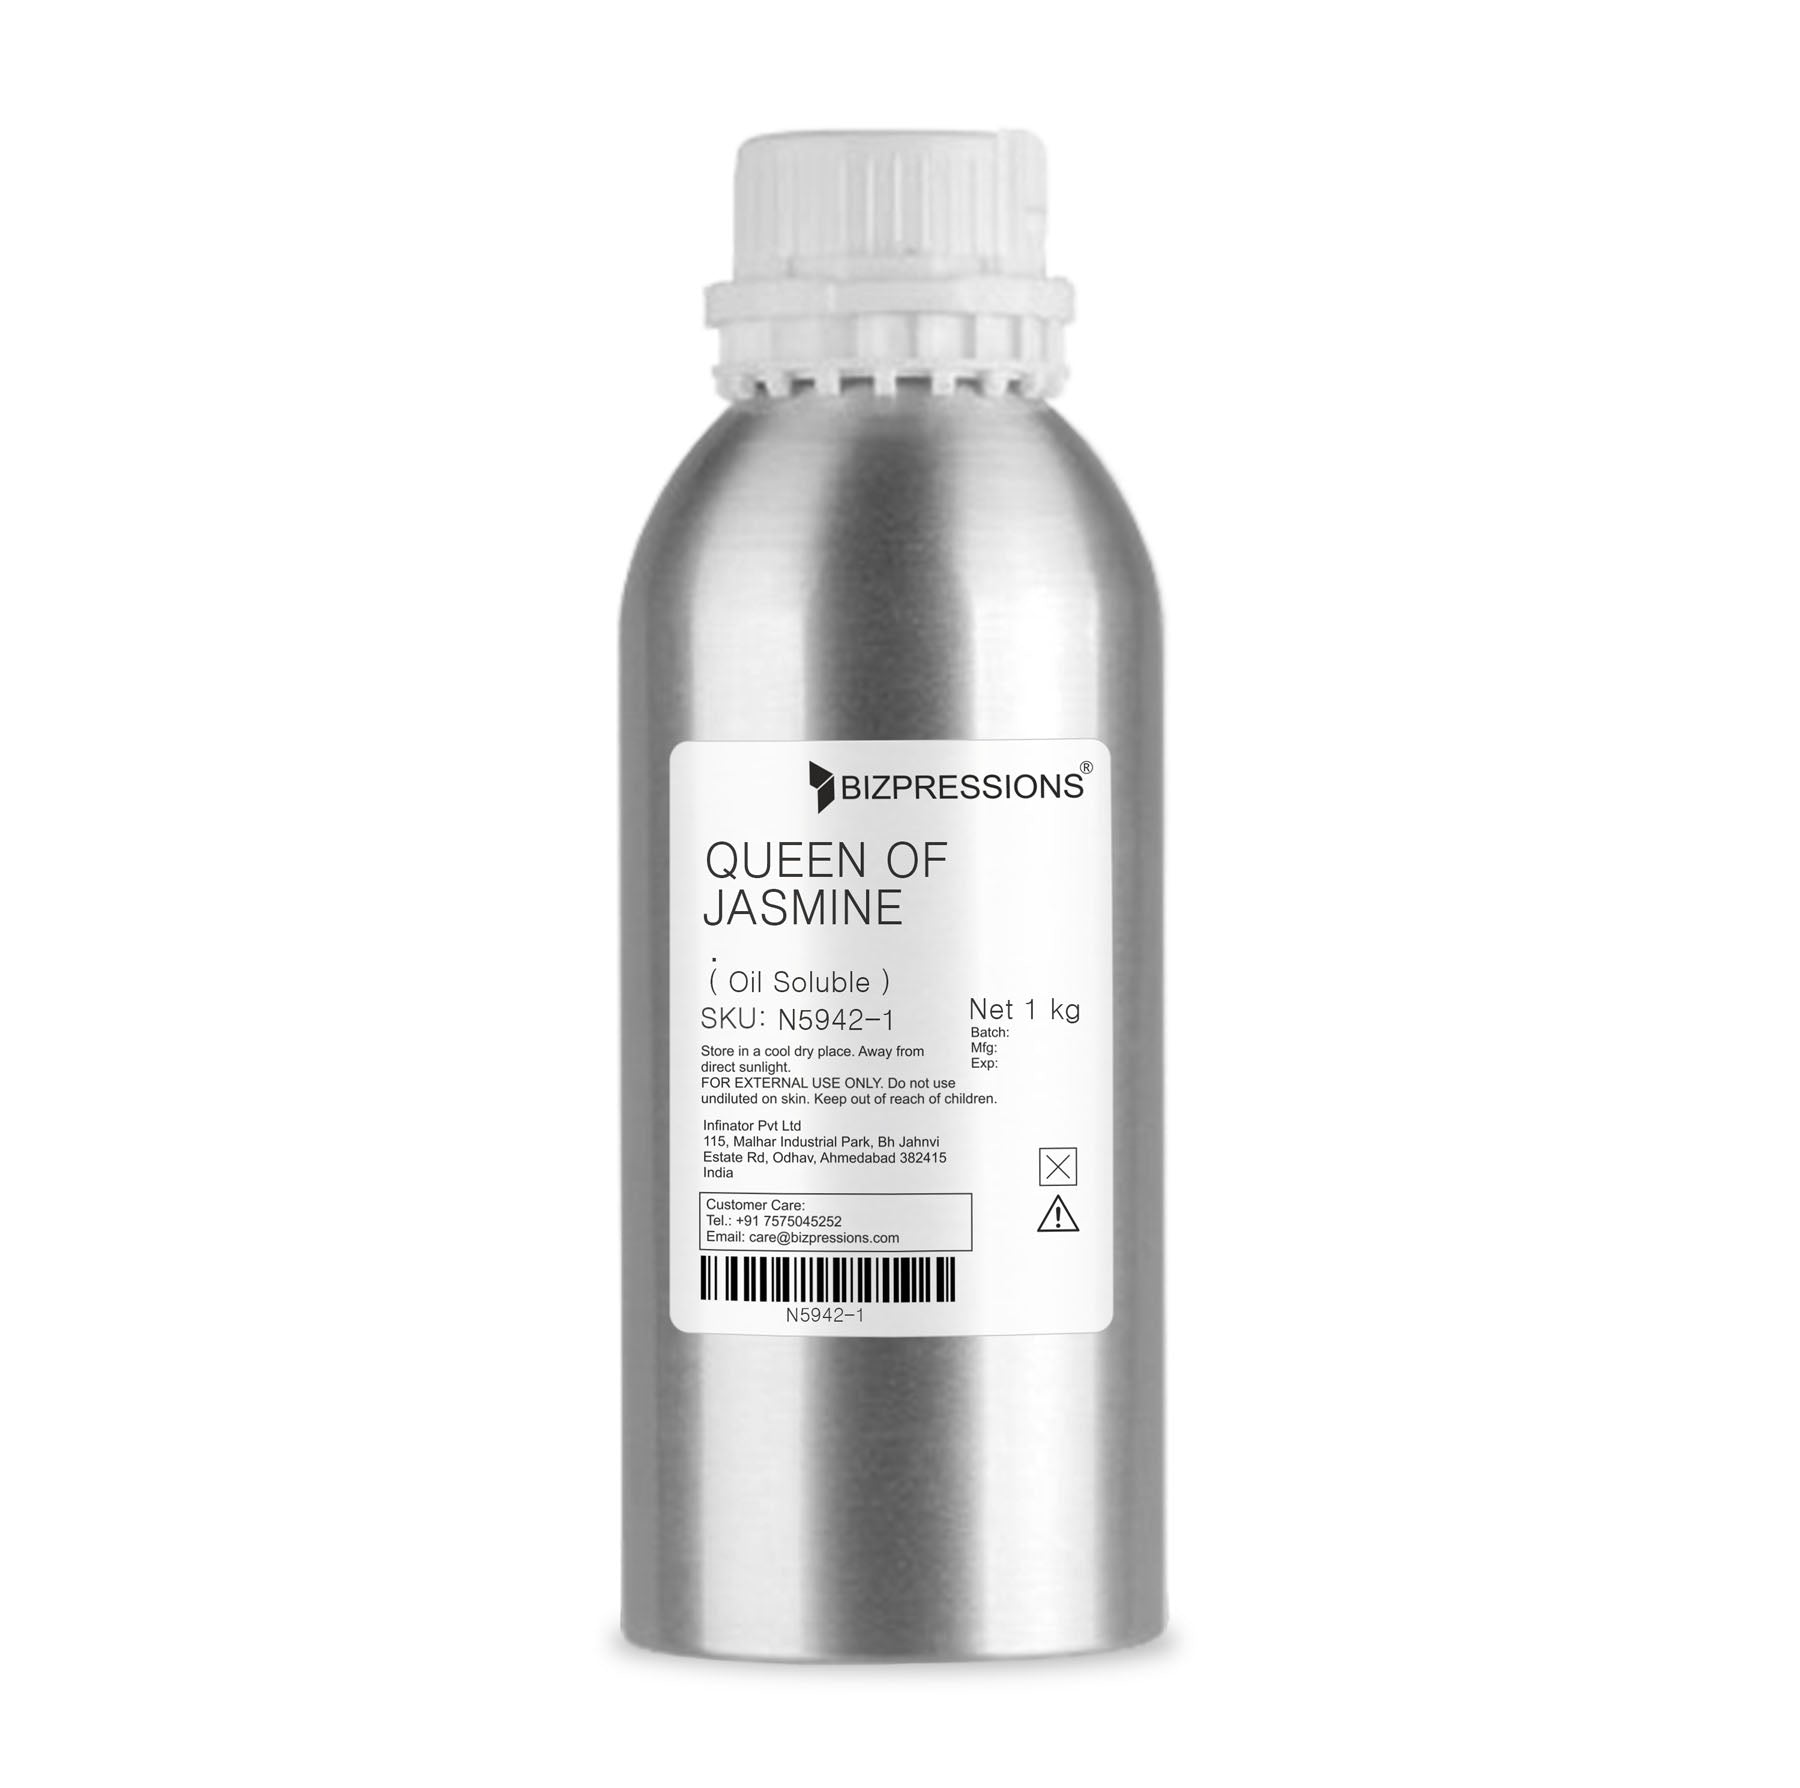 QUEEN OF JASMINE - Fragrance ( Oil Soluble ) - 1 kg